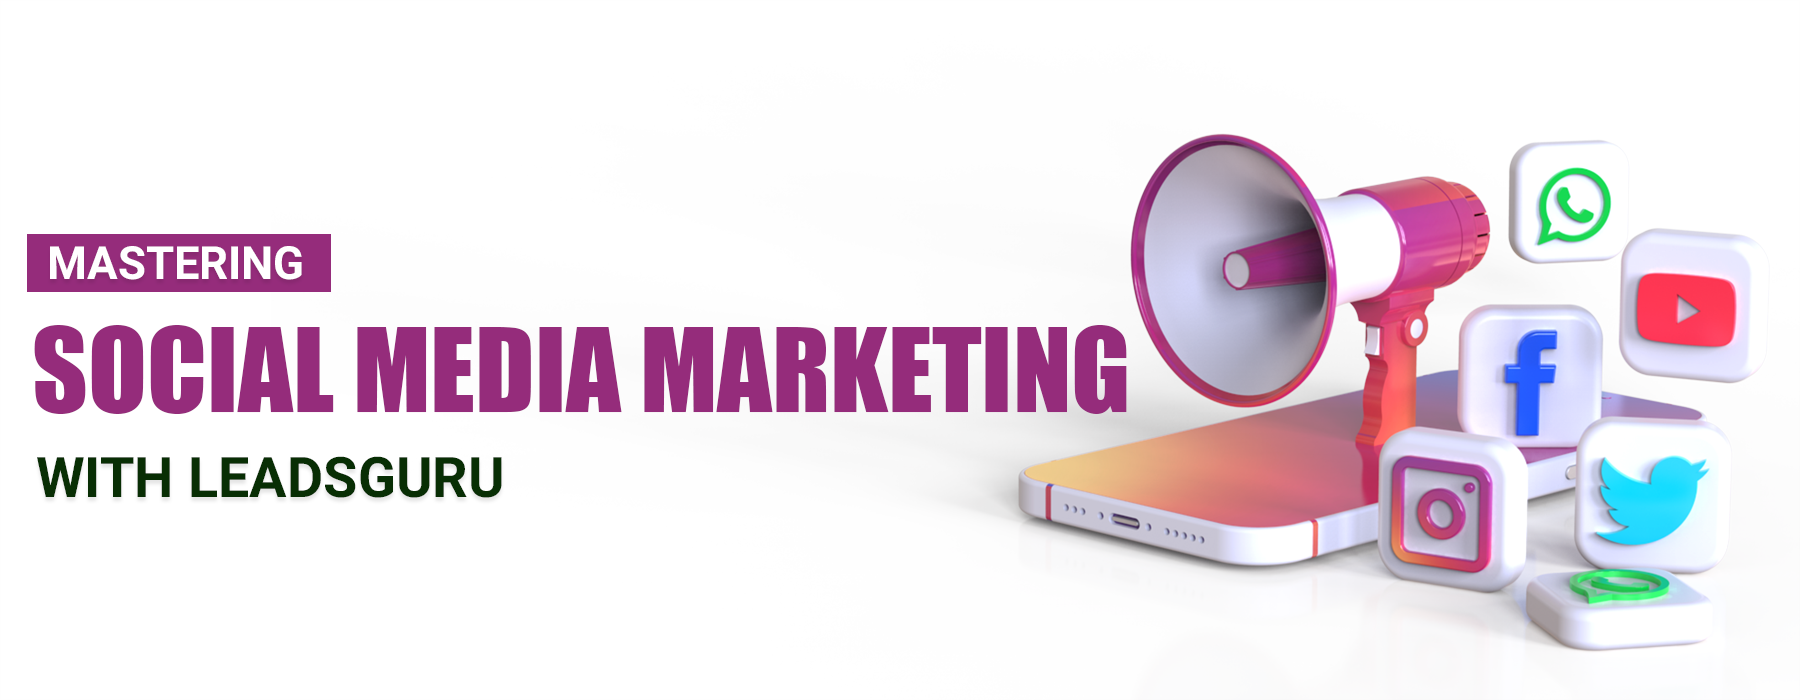 Mastering Social Media Marketing with LeadsGuru